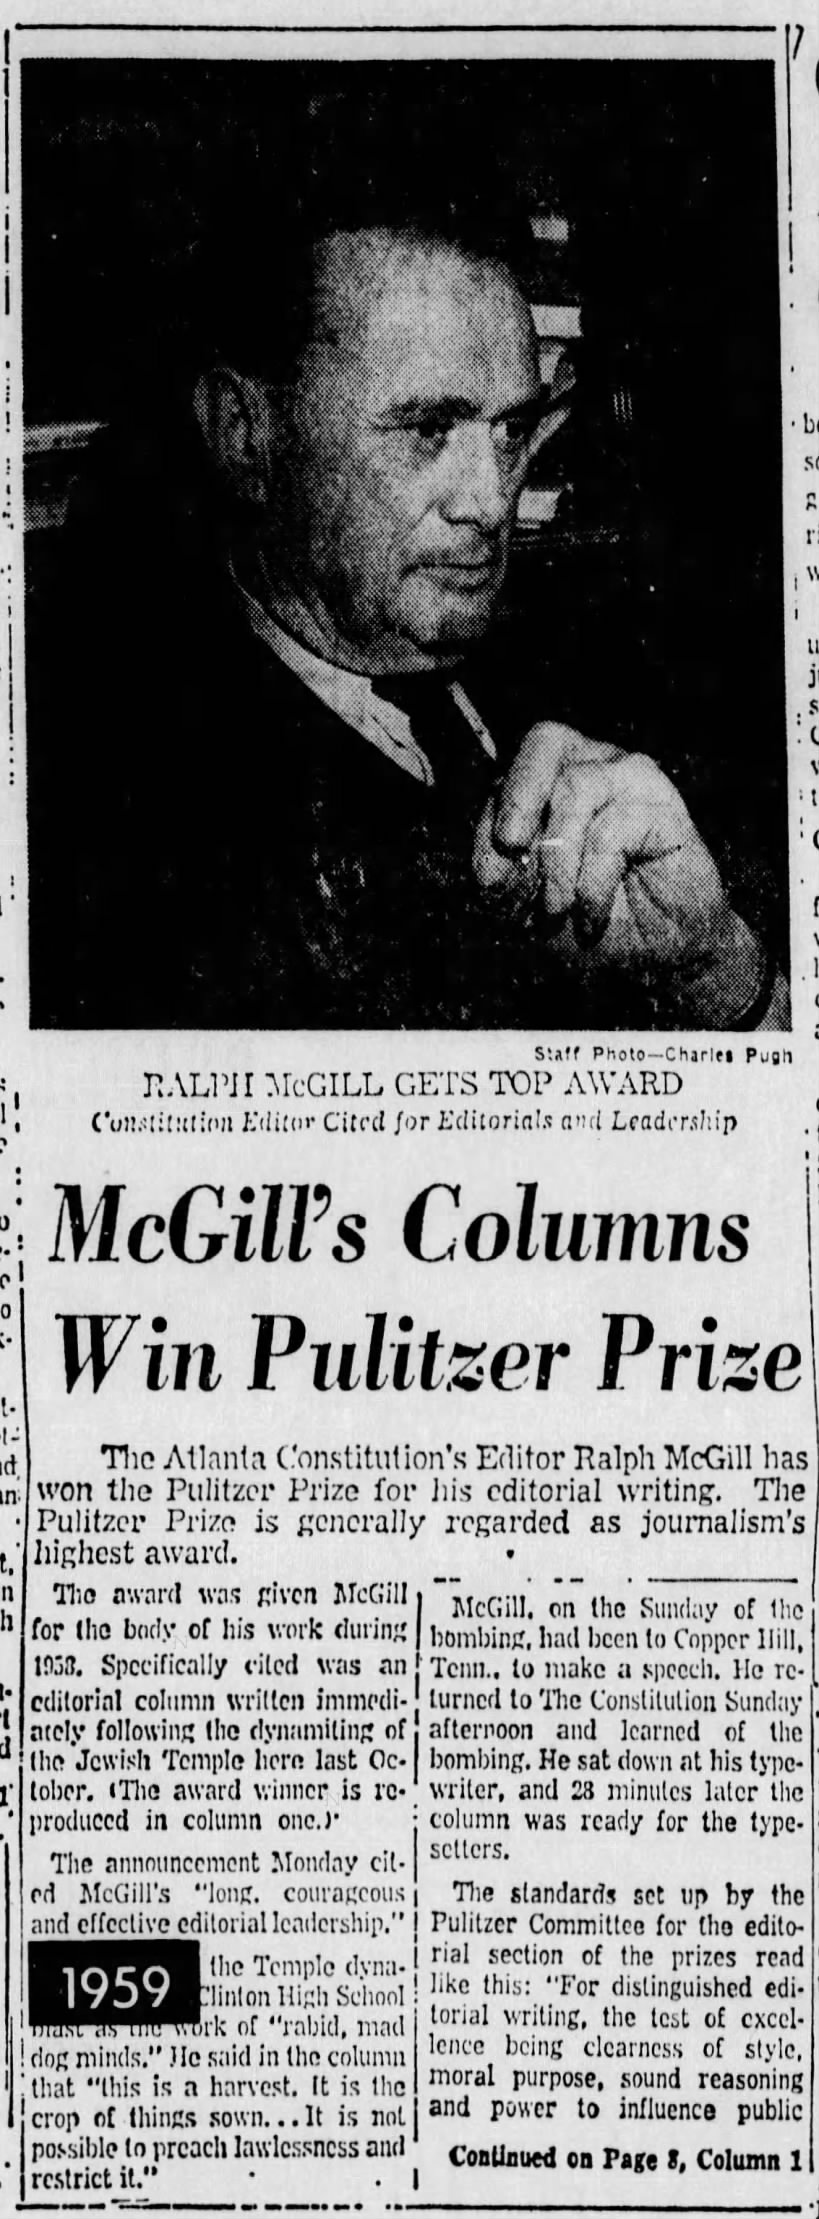 The Atlanta Constitution awarded Pulitzer  prize